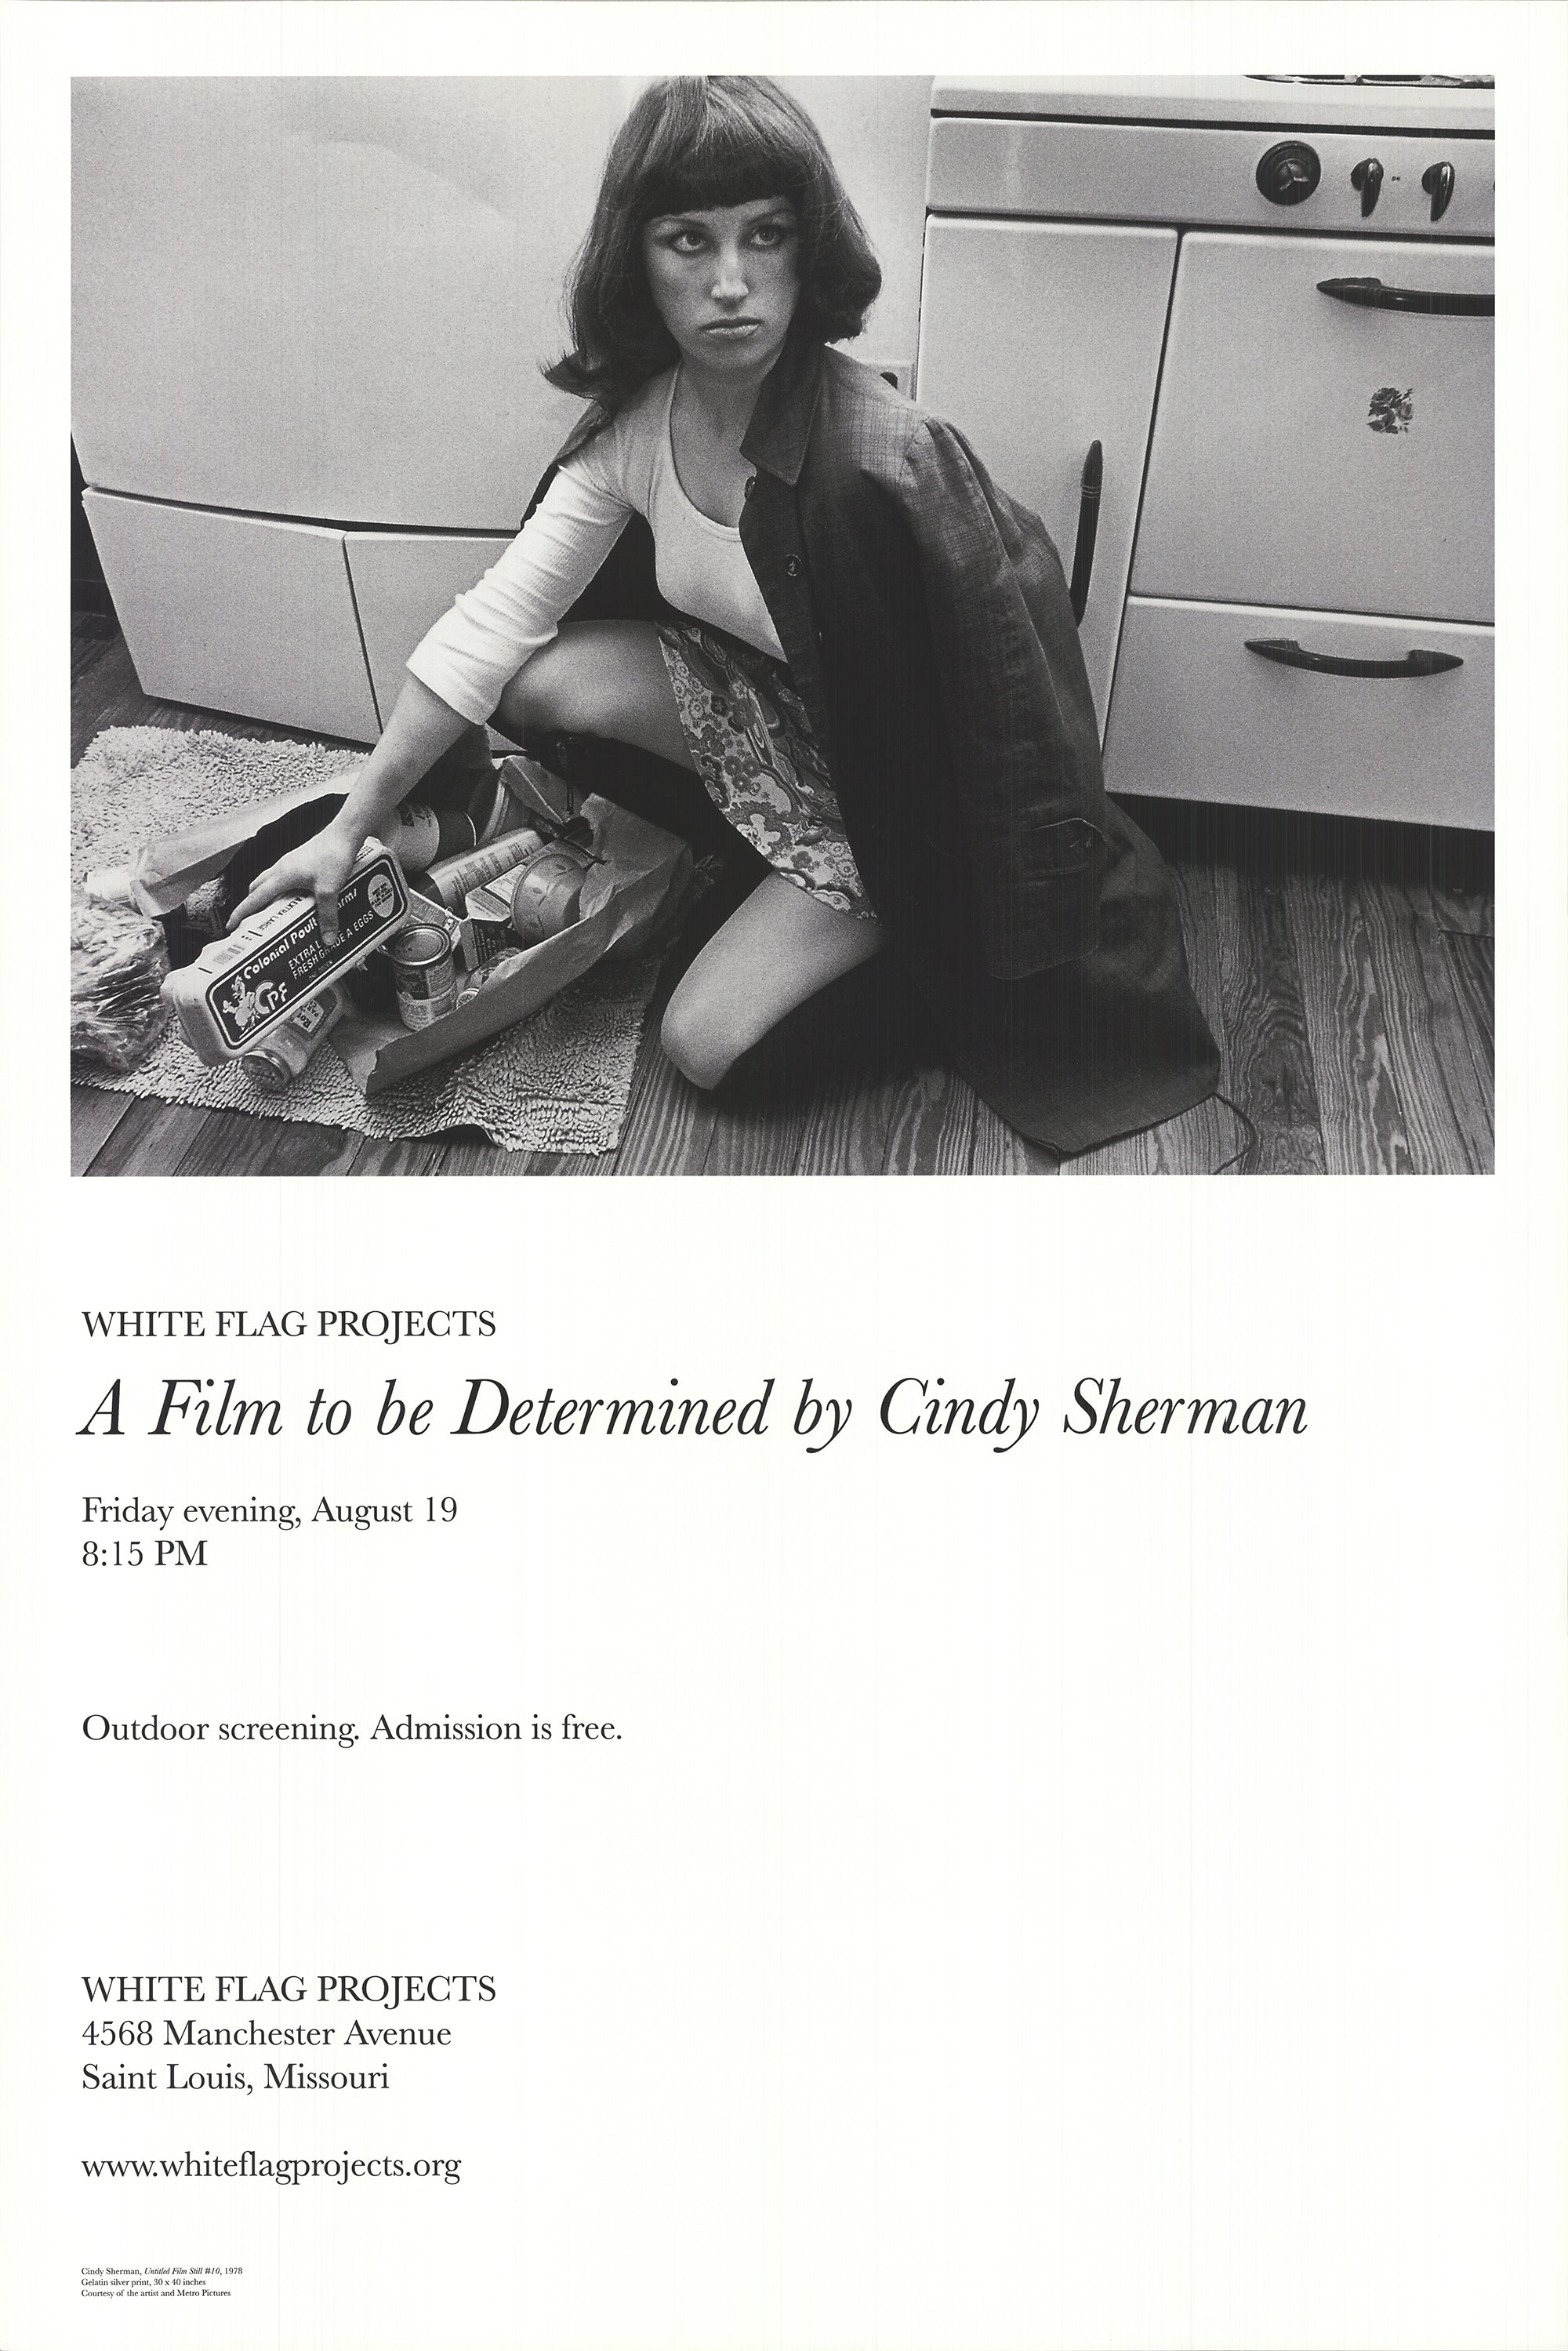 Cindy Sherman's Untitled Film Stills